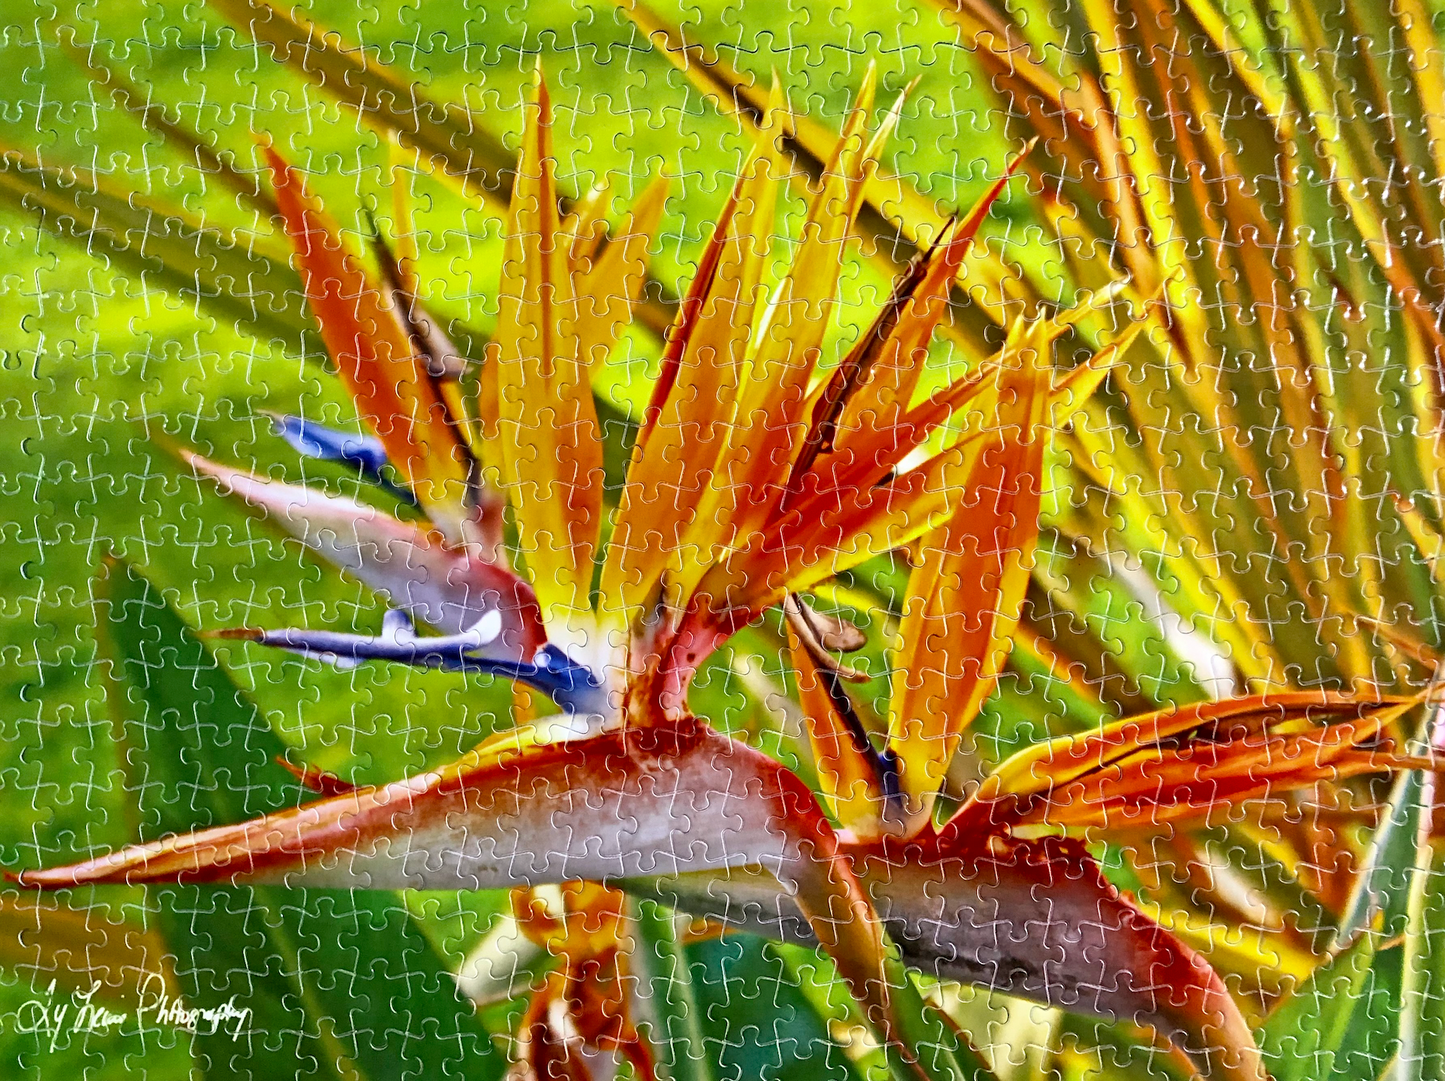 "Orange Bird of Paradise" by Ty Lewis